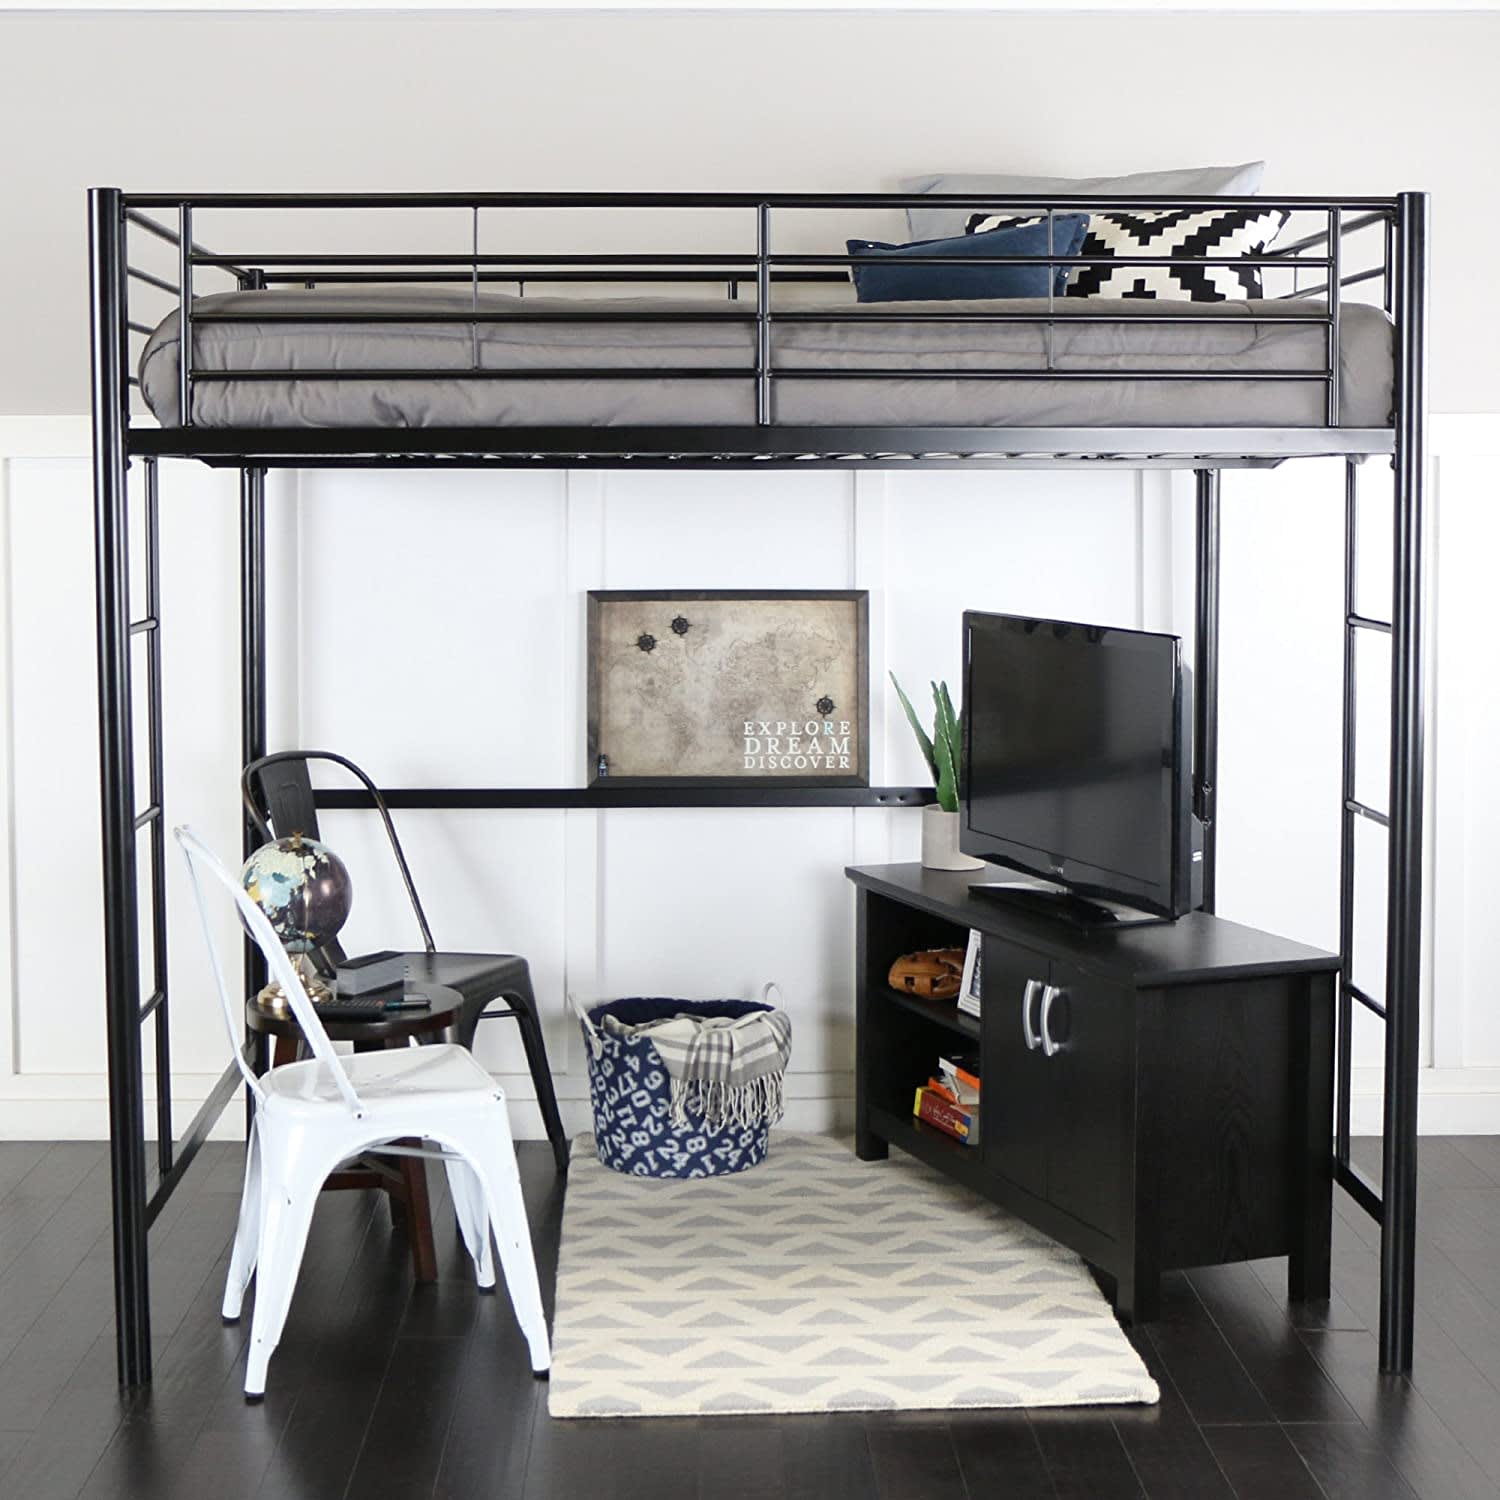 affordable loft bed with desk